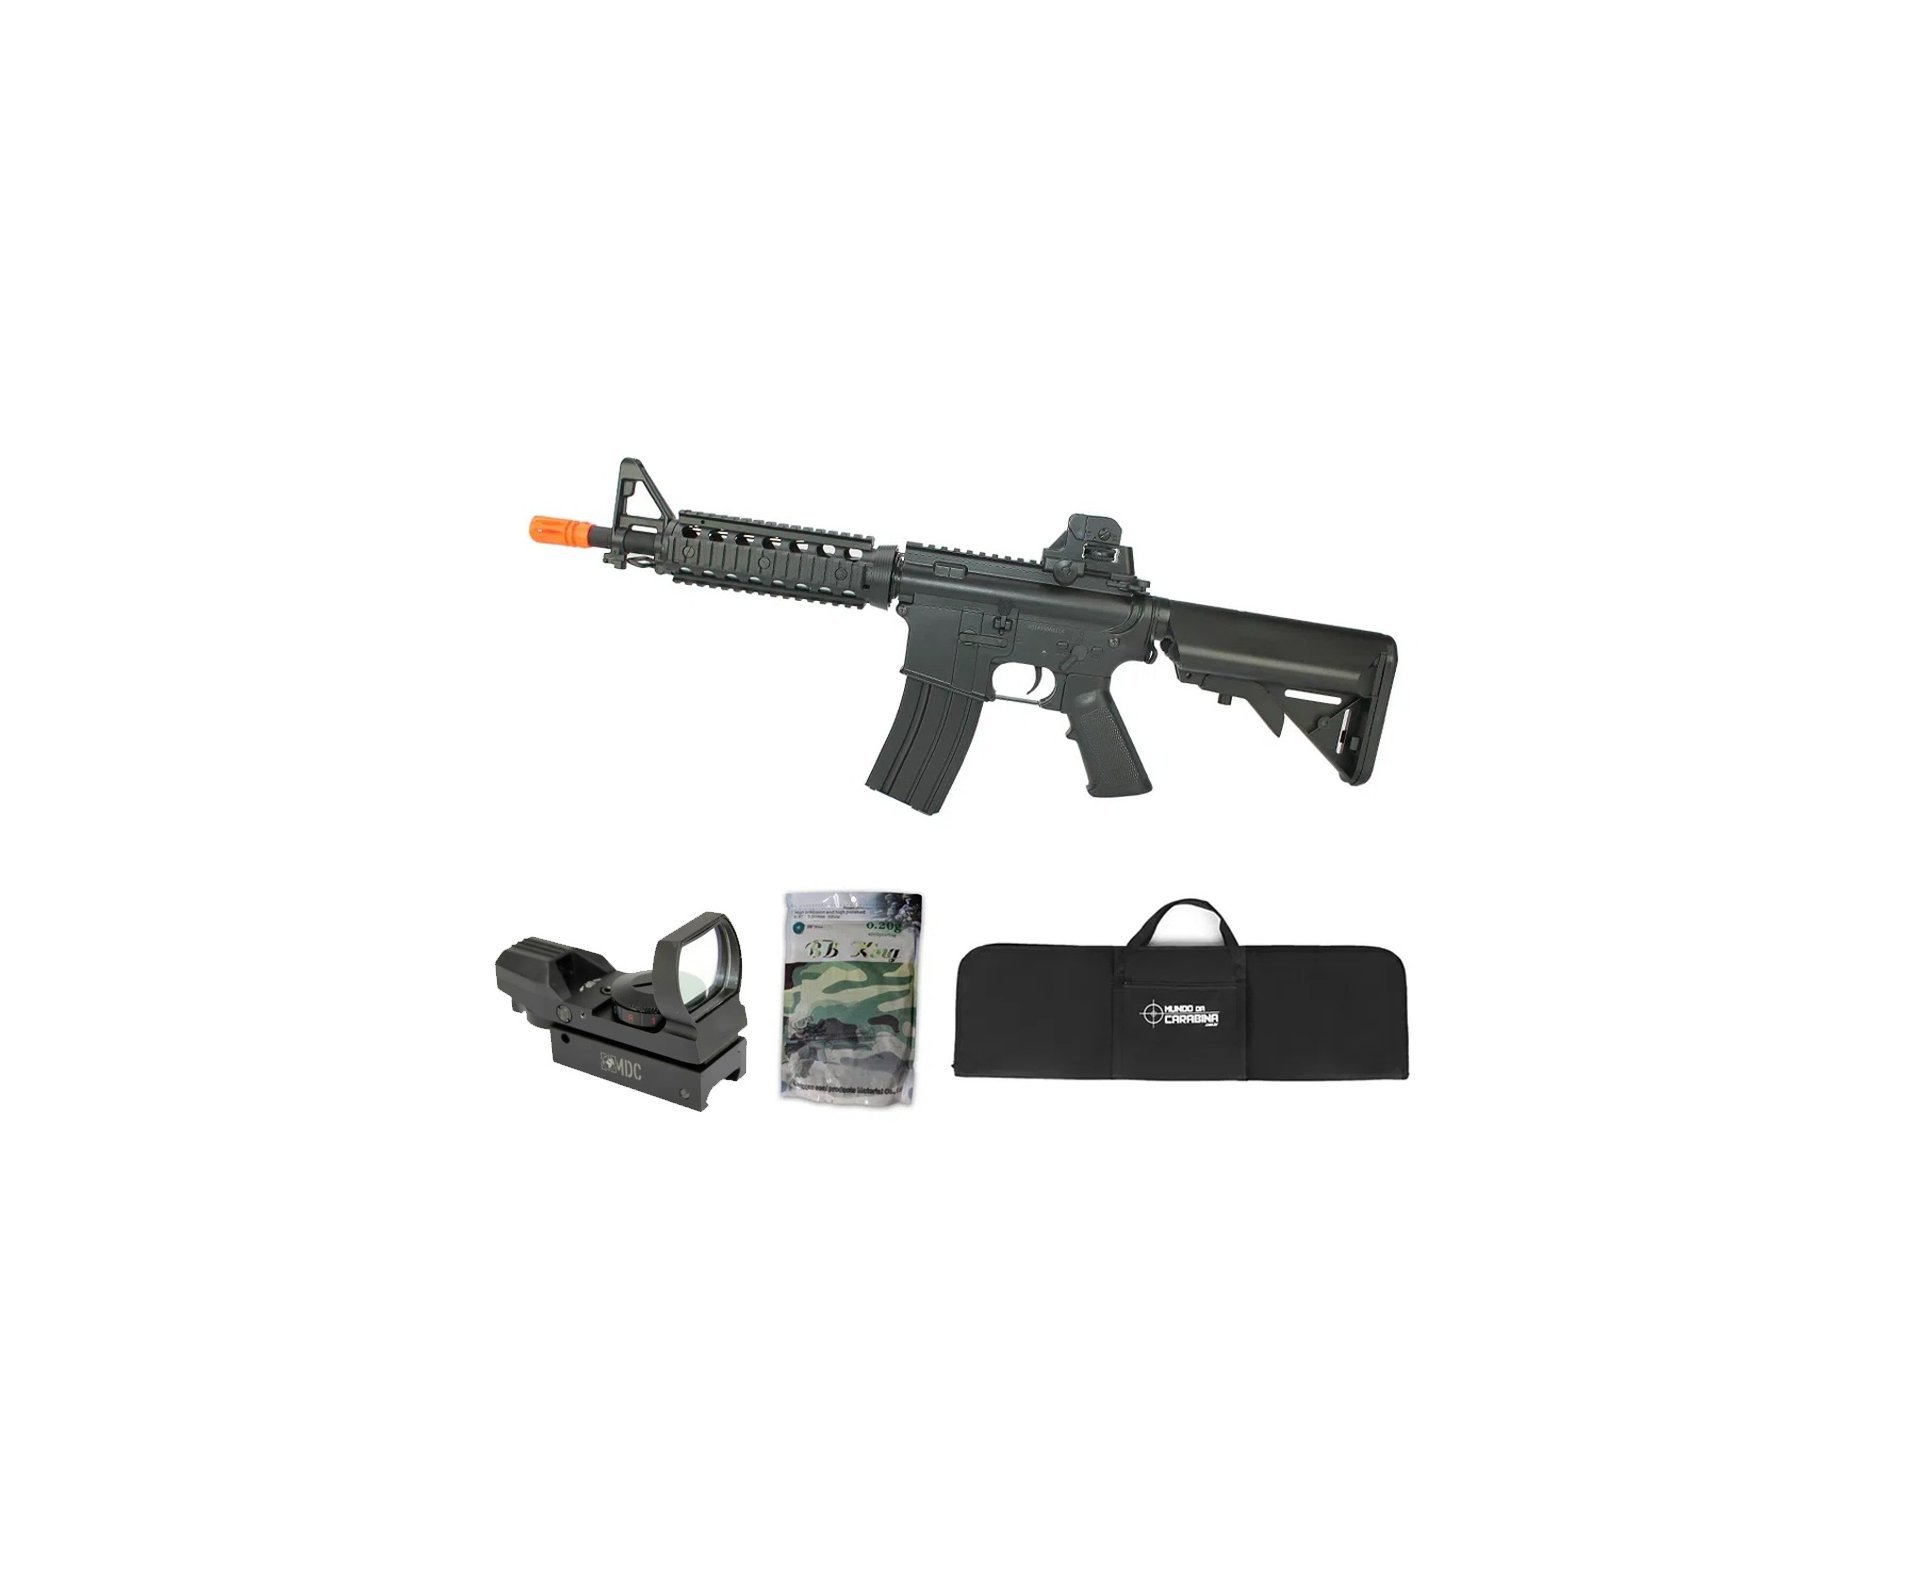 Rifle De Airsoft M4a1 Cqb Ris Cm506 Cal 6mm - Eletrico Bivolt - Cyma + Red Dot 1x22 + 4000 Esferas 0,20g + Capa